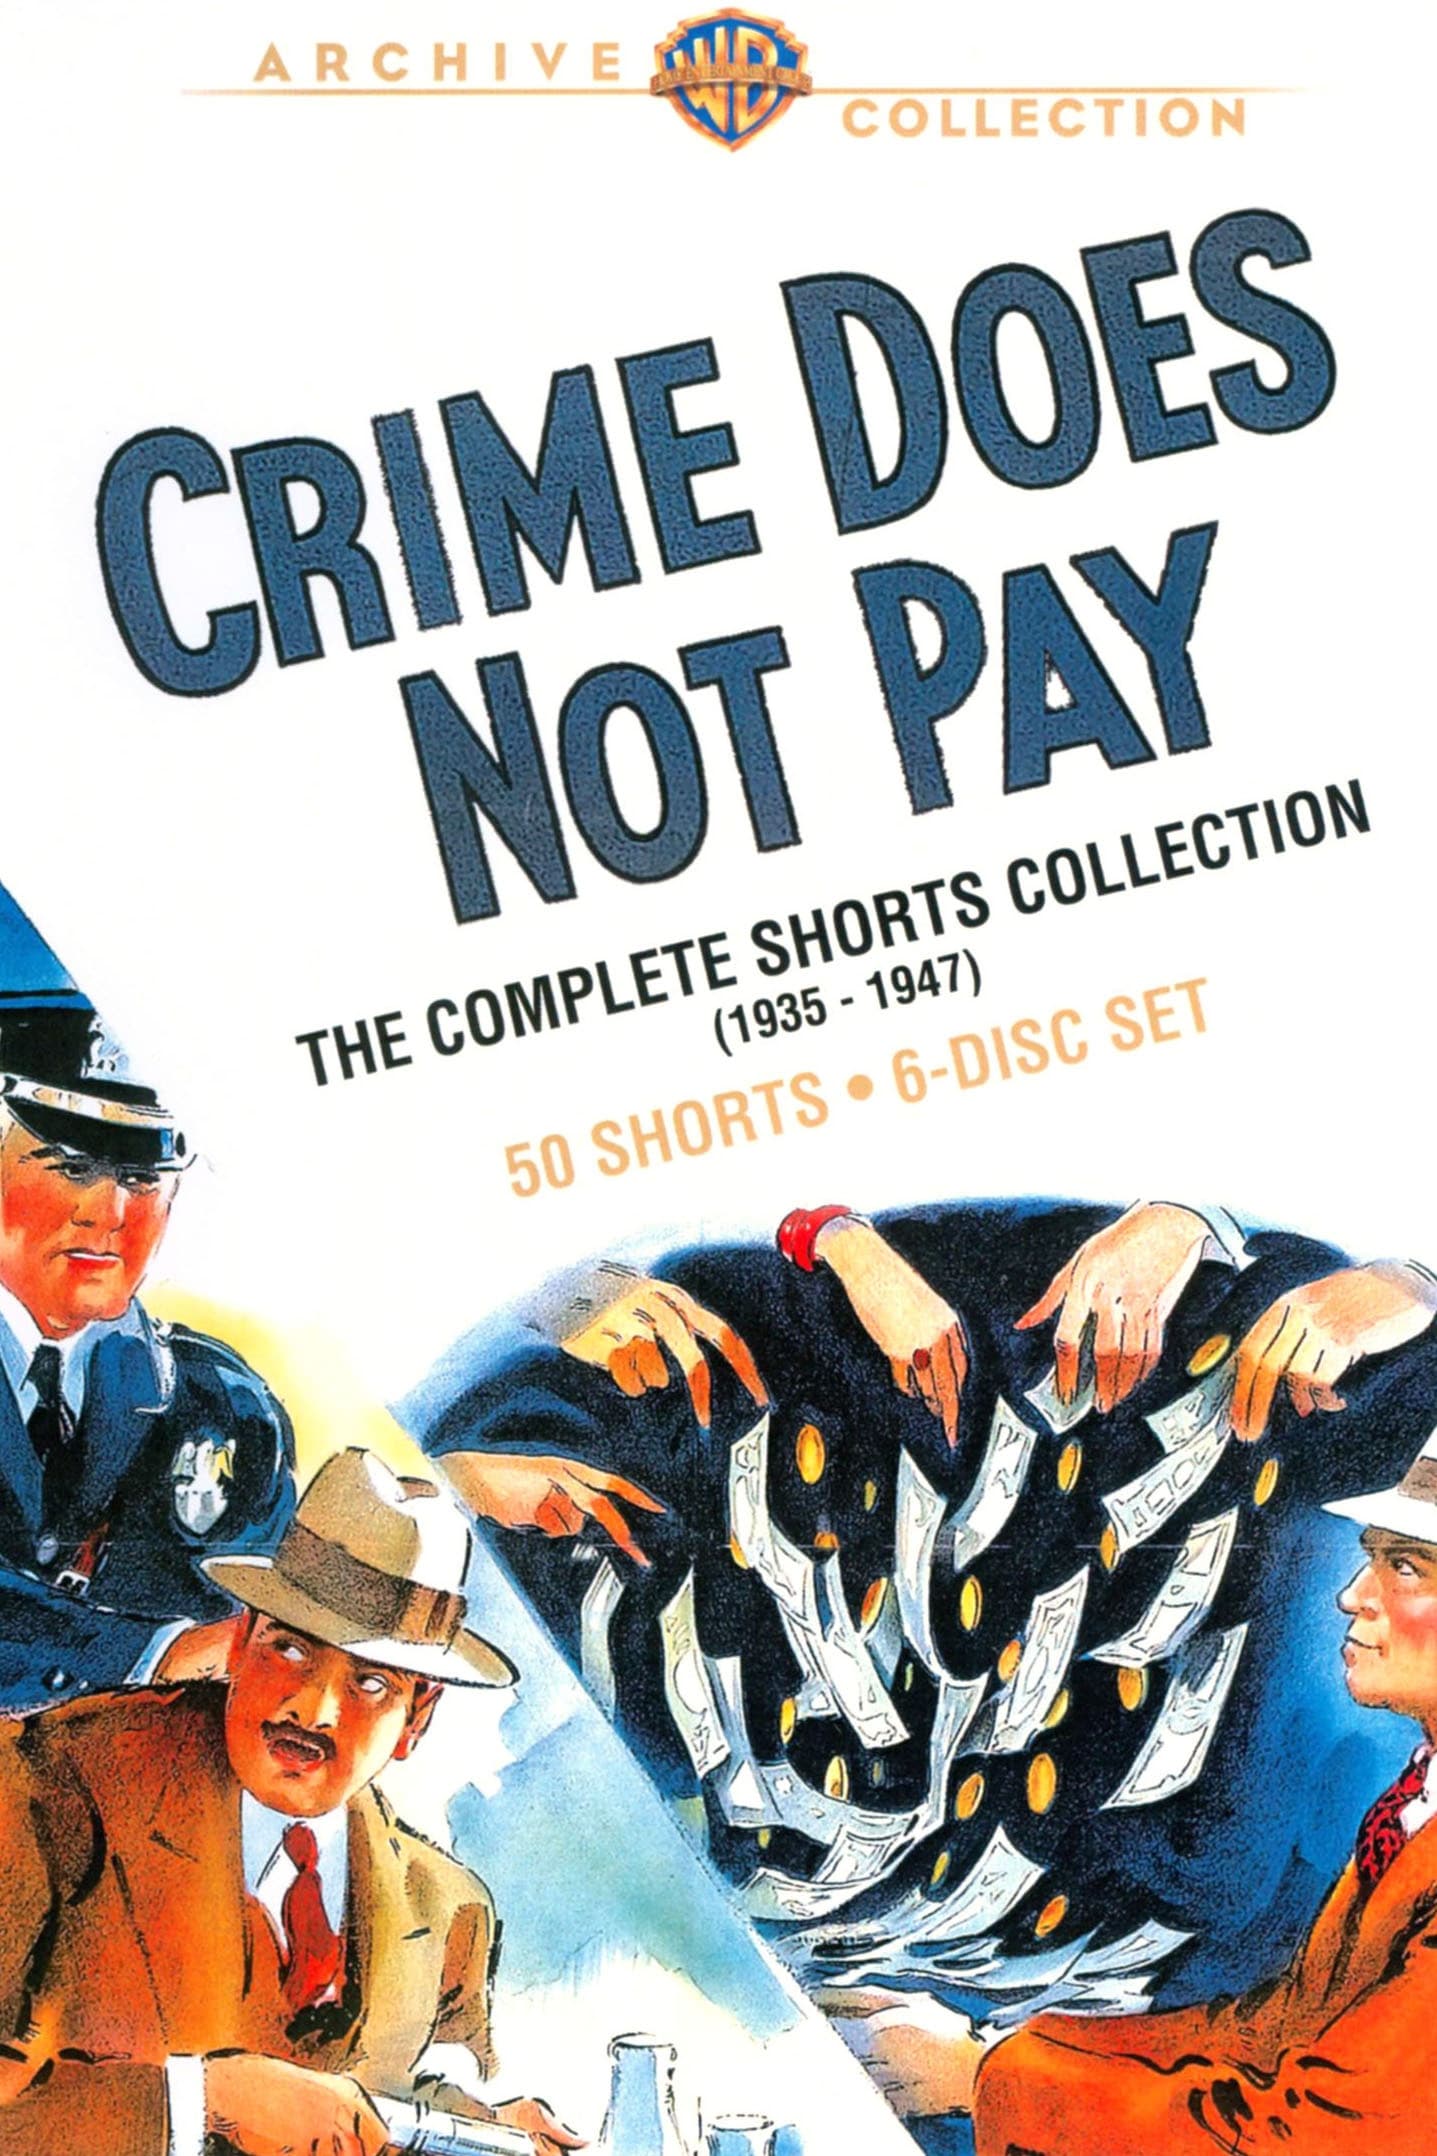 Behind the Criminal (1937)